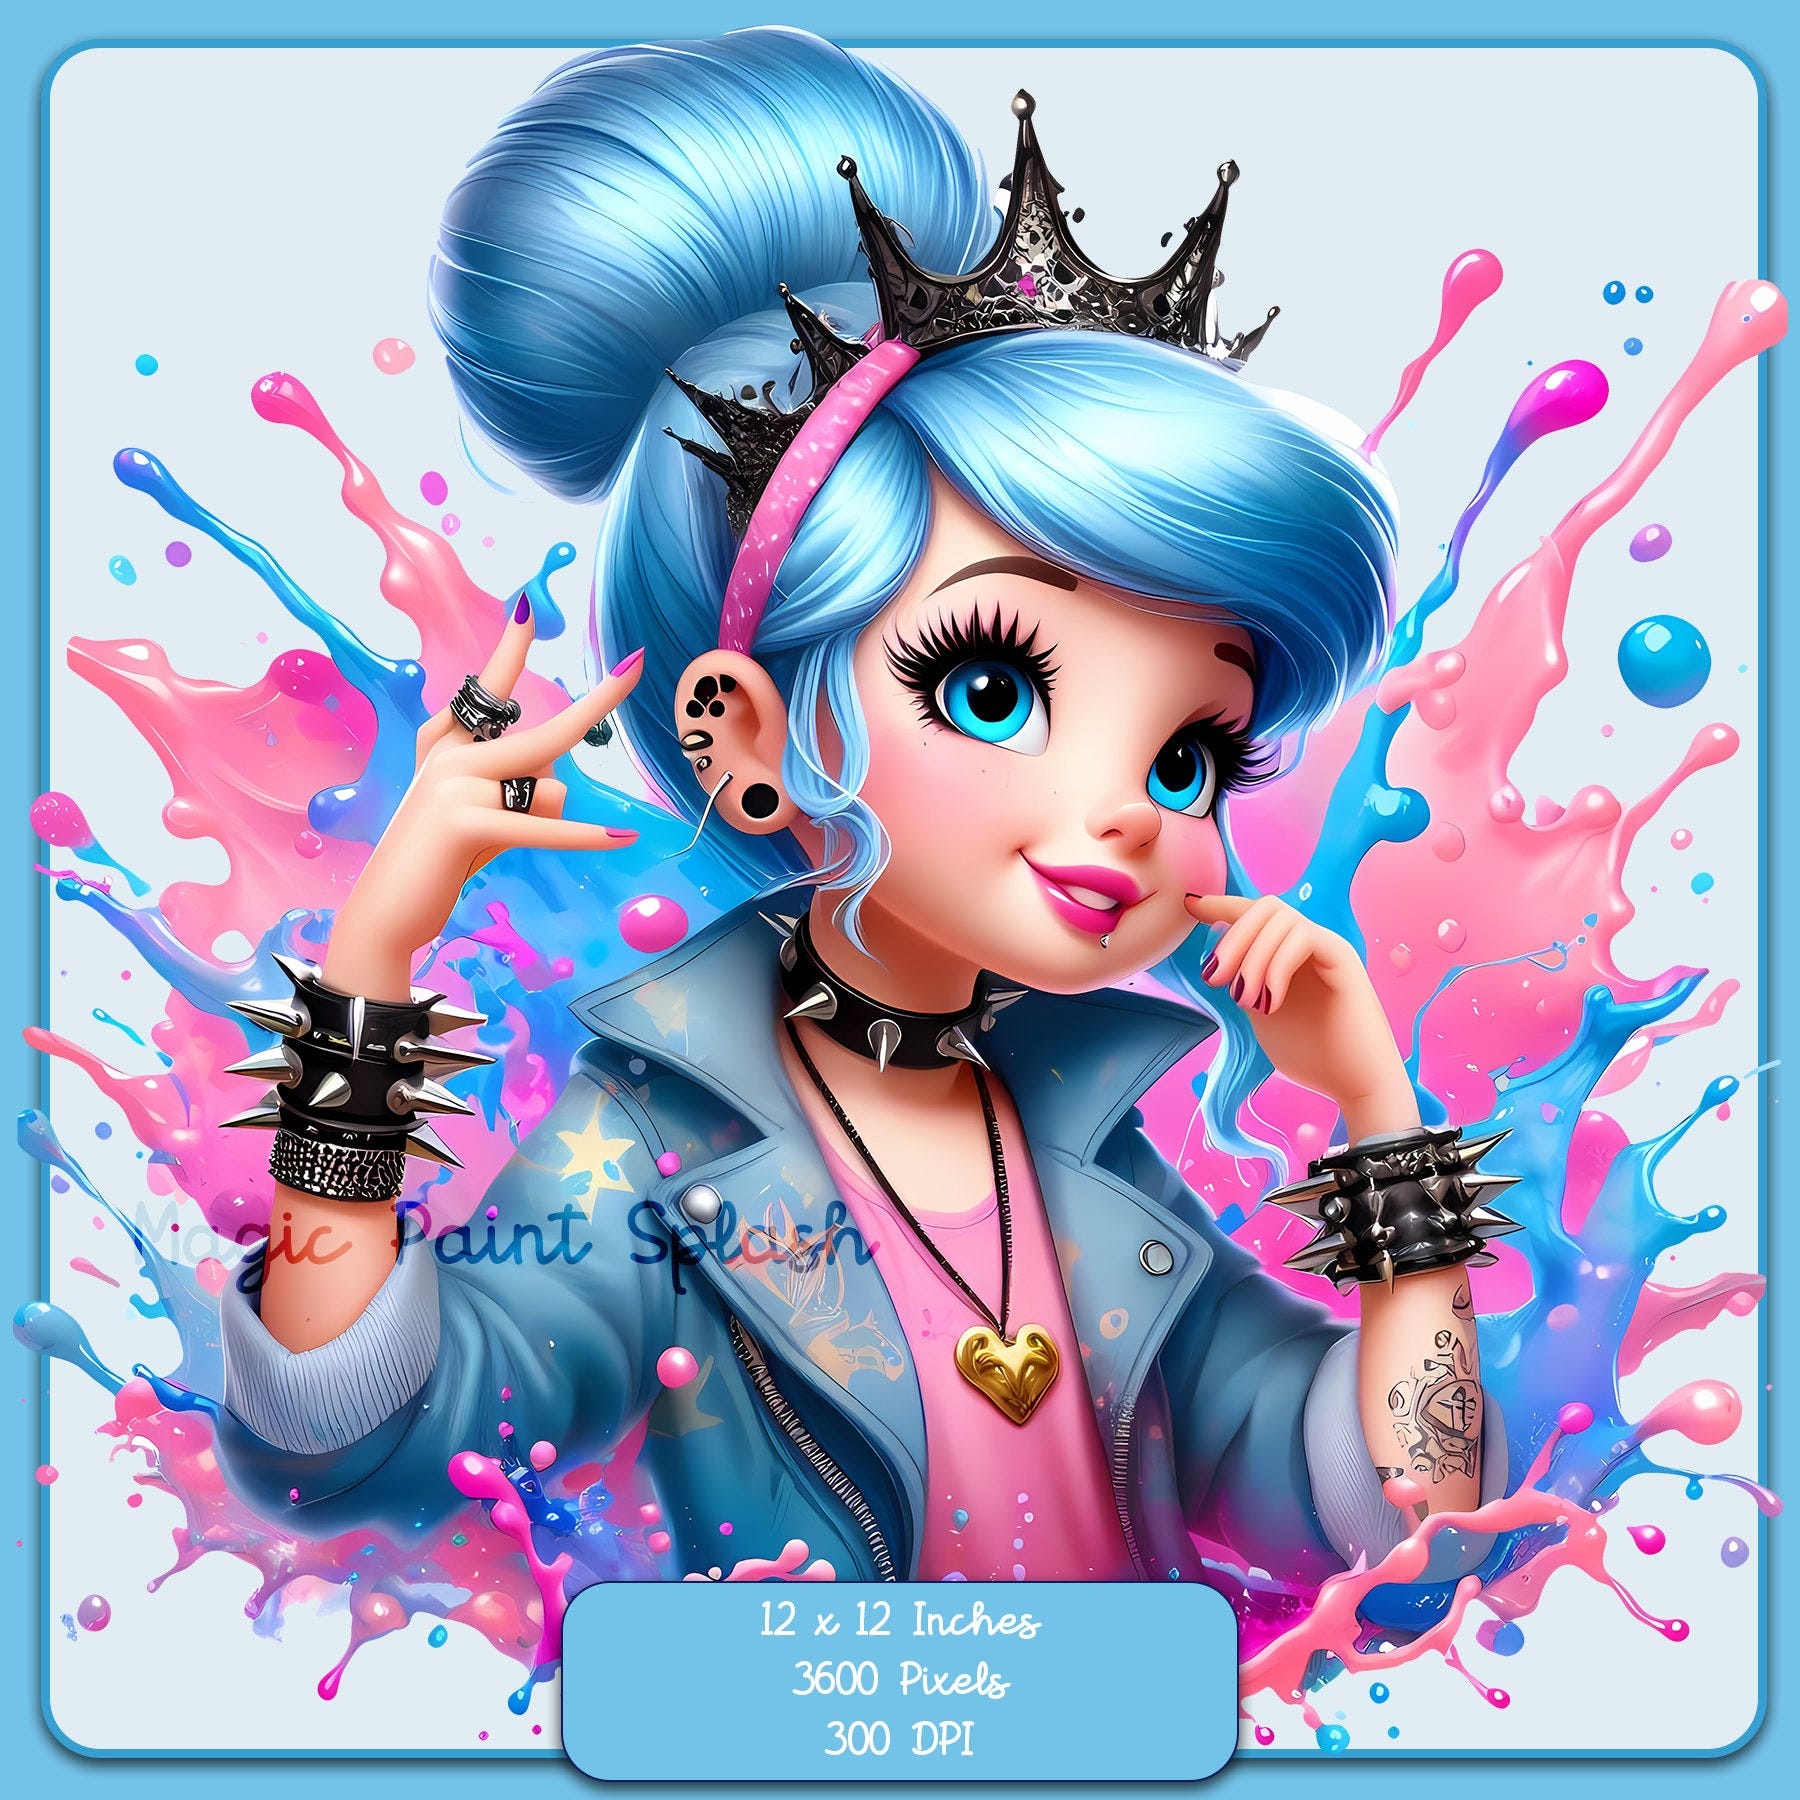 Cinderella Punk Rock Watercolor Splash, Clipart Images, Graphics and Artwork, Rainbow Aesthetic, PNG Cute Princess Images